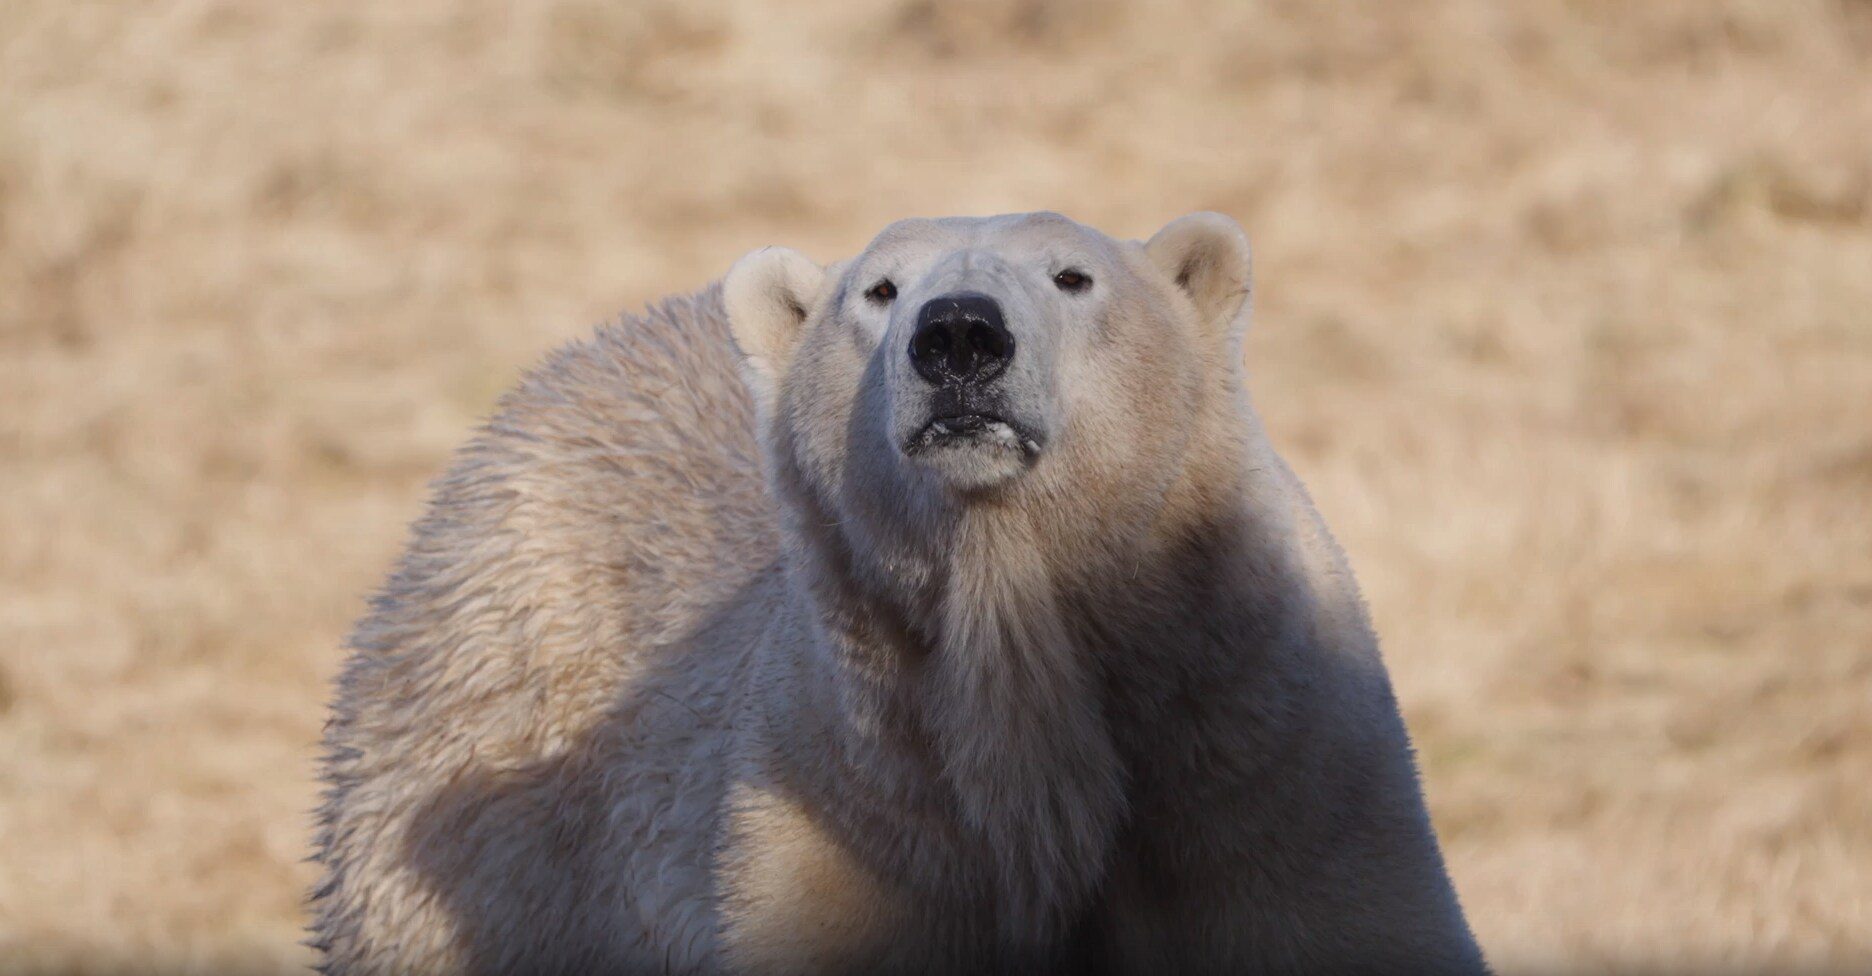 Green polar bears puzzle zoo visitors